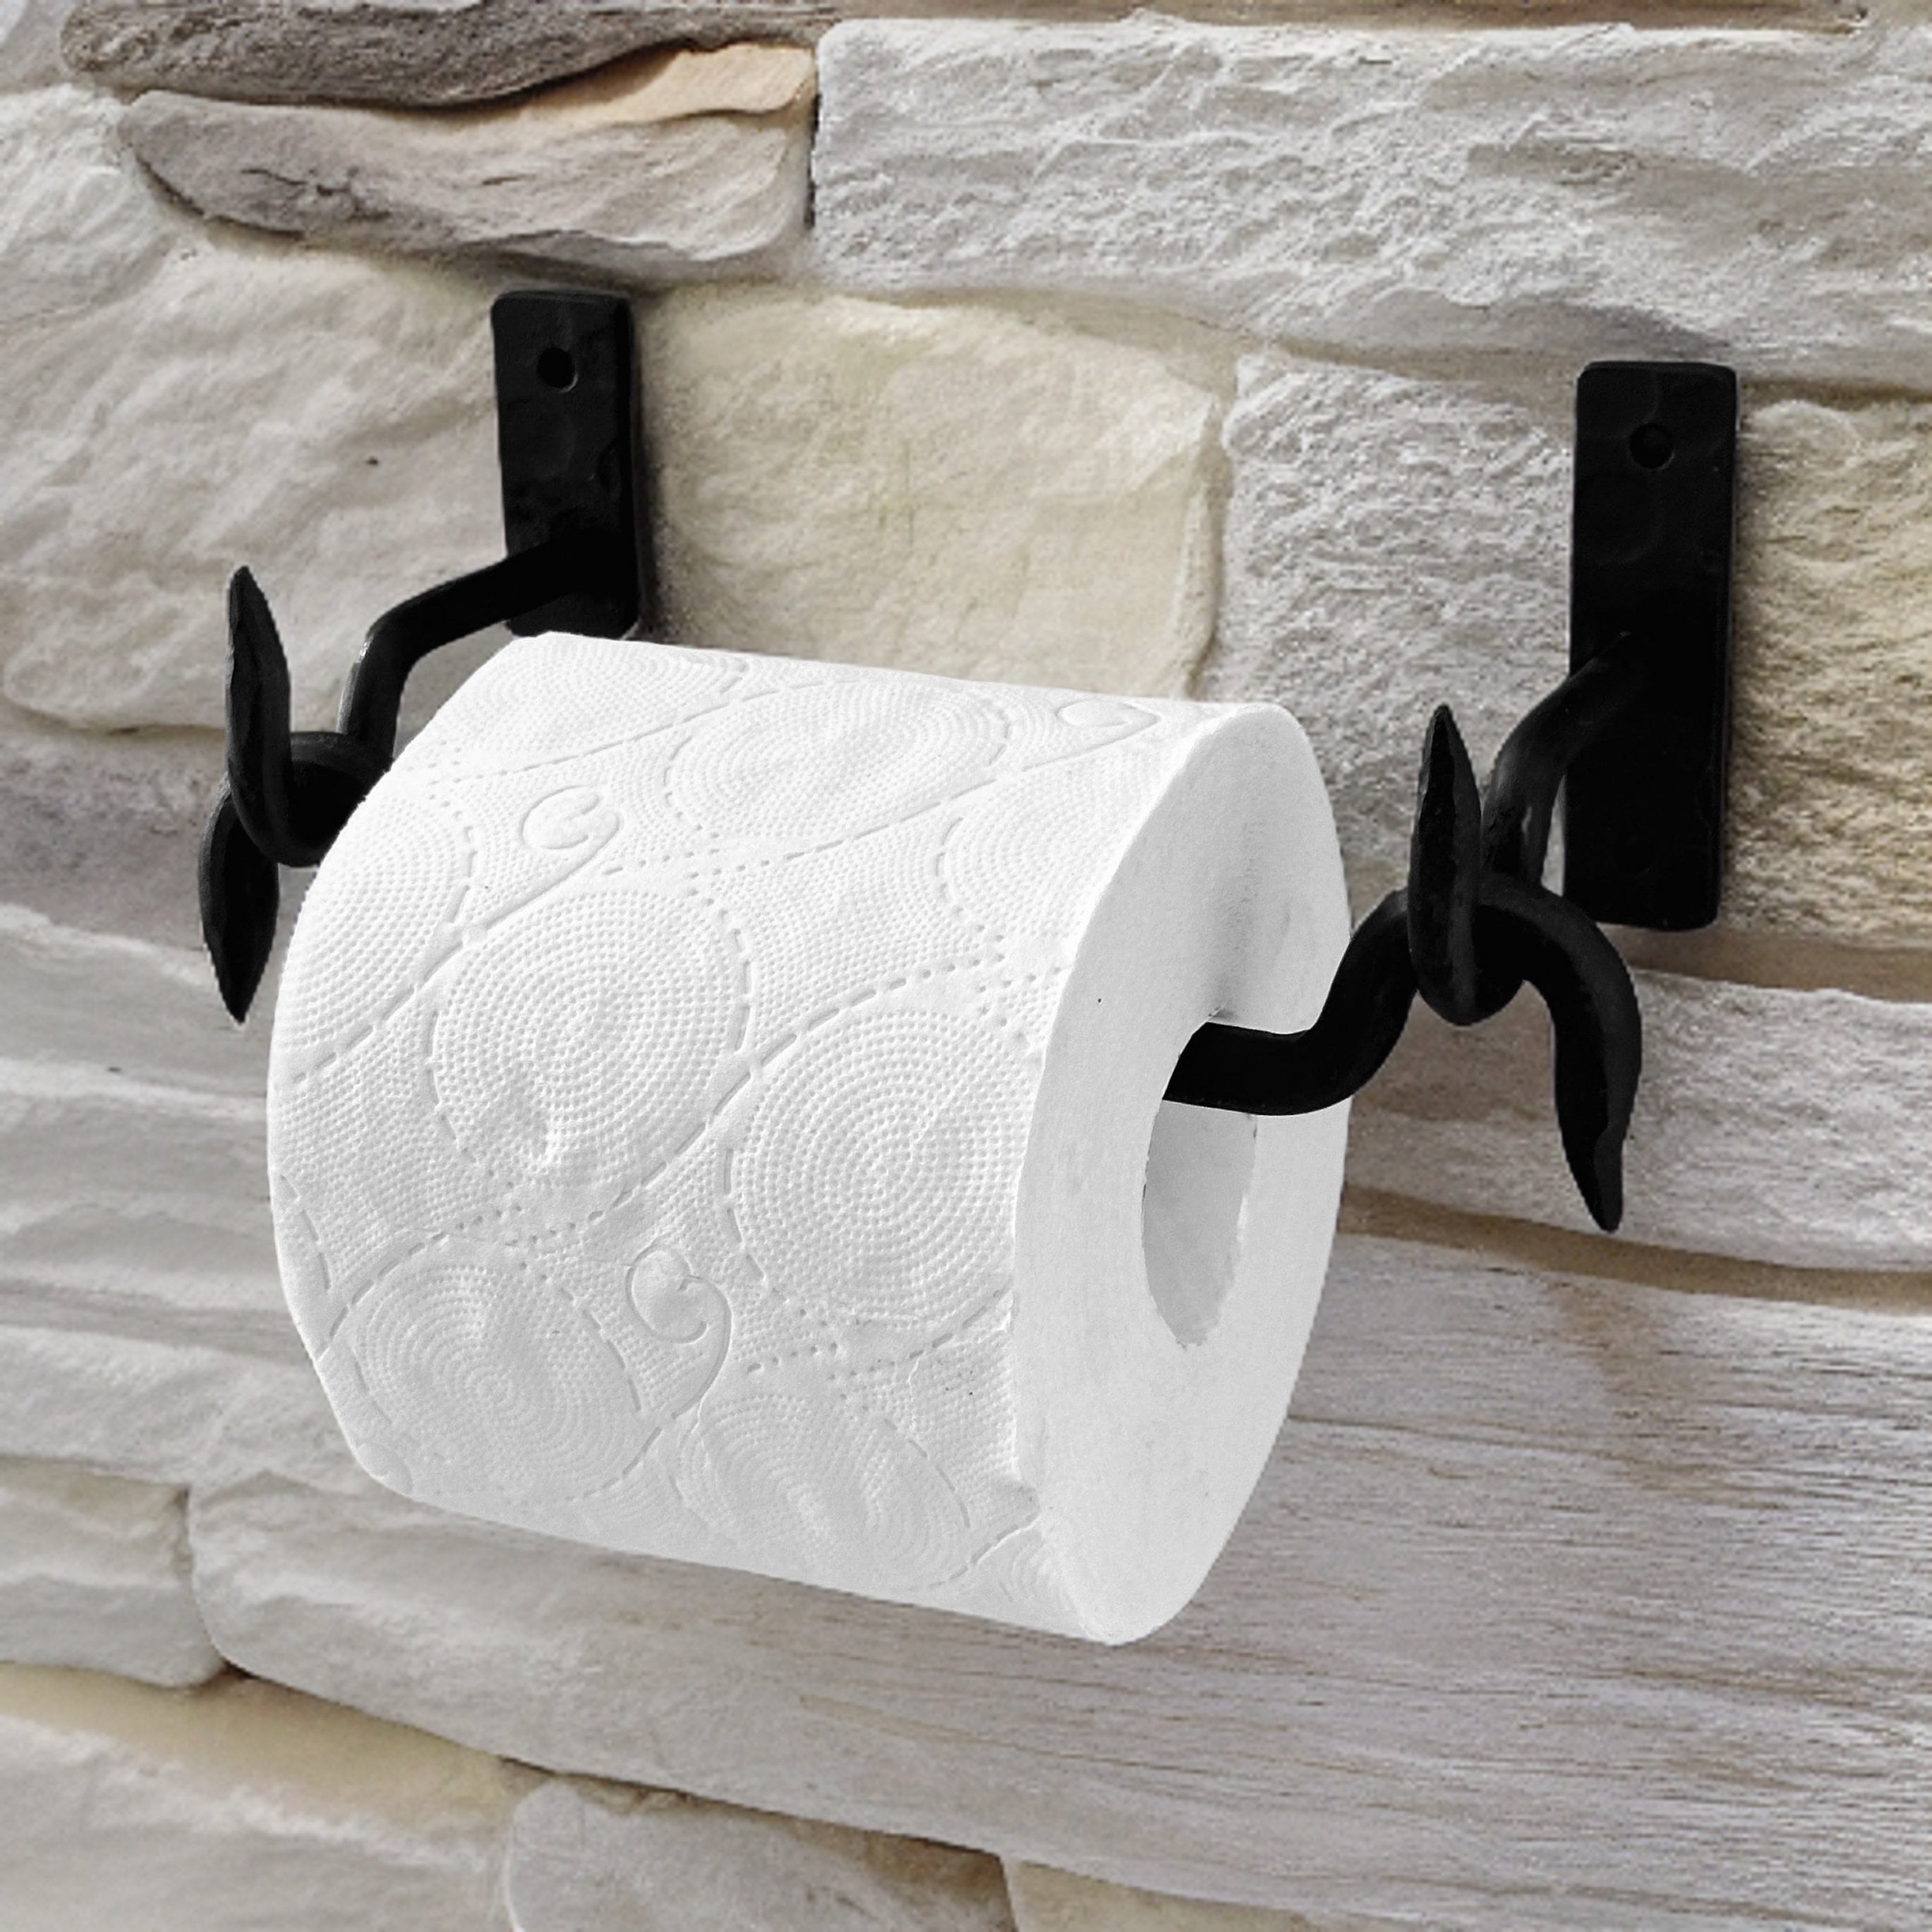 Handmade Wrought Iron Toilet Paper Holder – Black Iron Bathroom Accessories